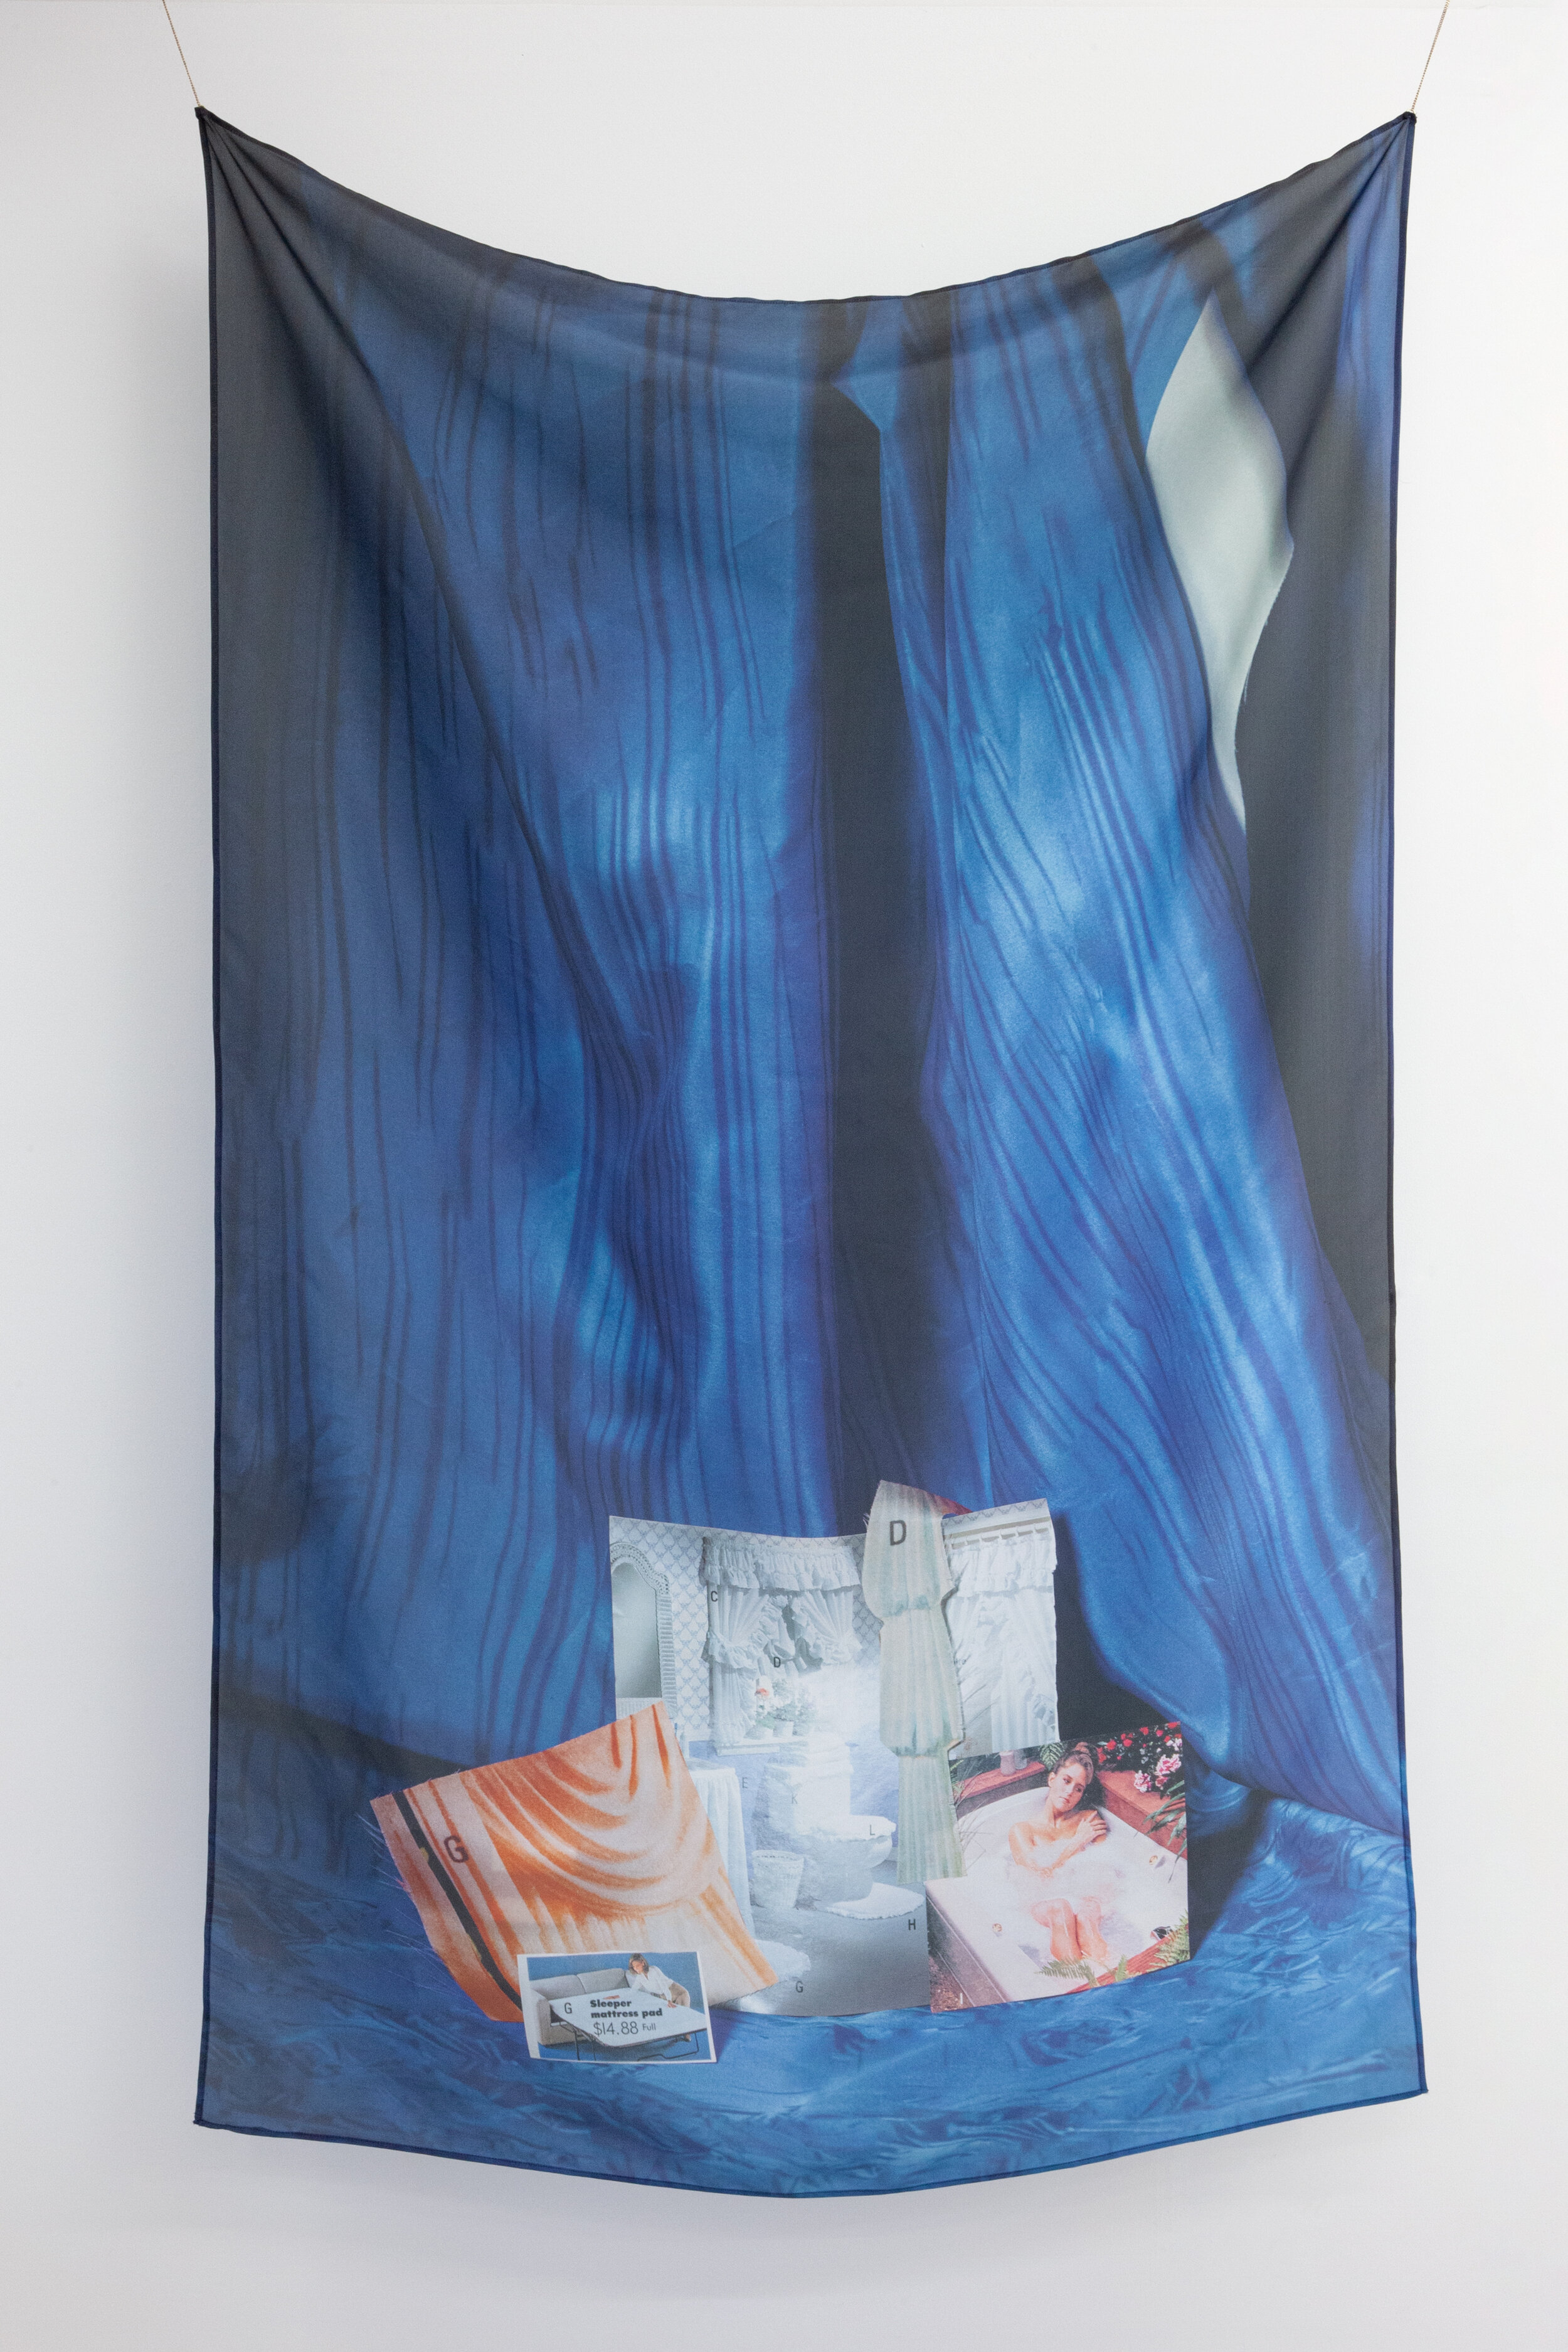  Sarah Palmer,  You left me, sweet , 2018, Pigmented Inkjet Print on Habotai Silk, 76.25h x 48w in  